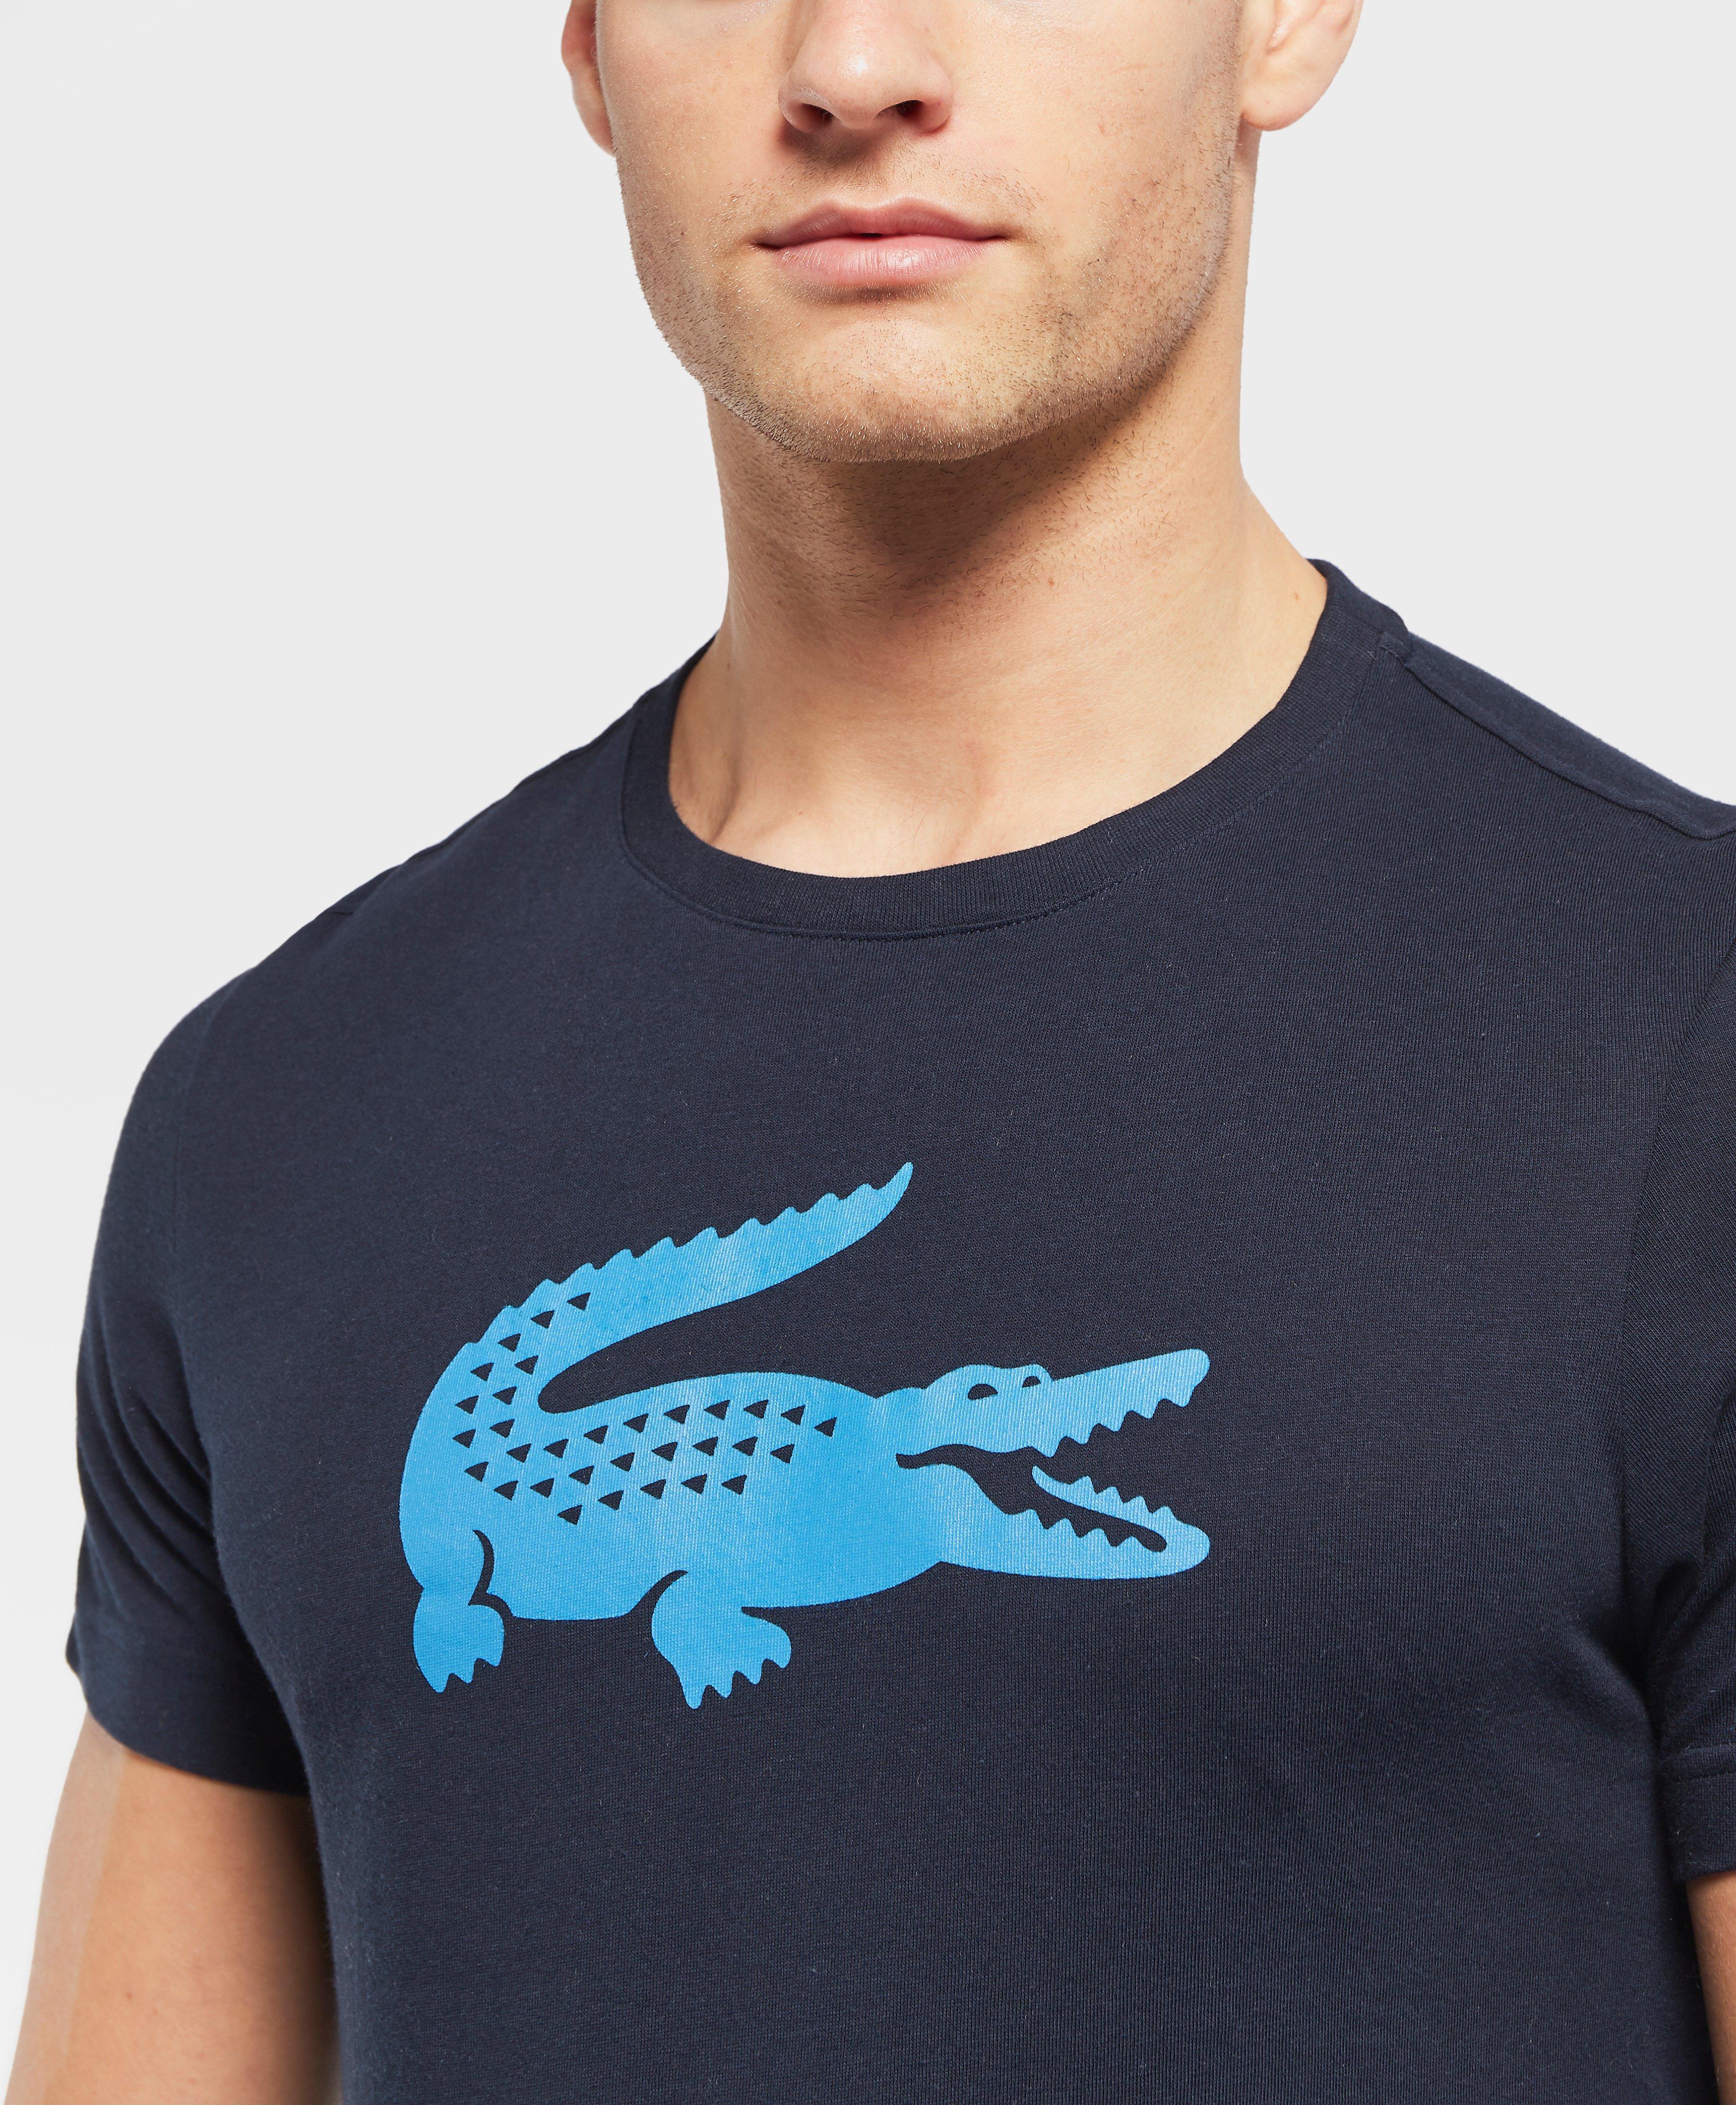 Lacoste Cotton Croc Logo Short Sleeve T-shirt in Blue for Men - Lyst